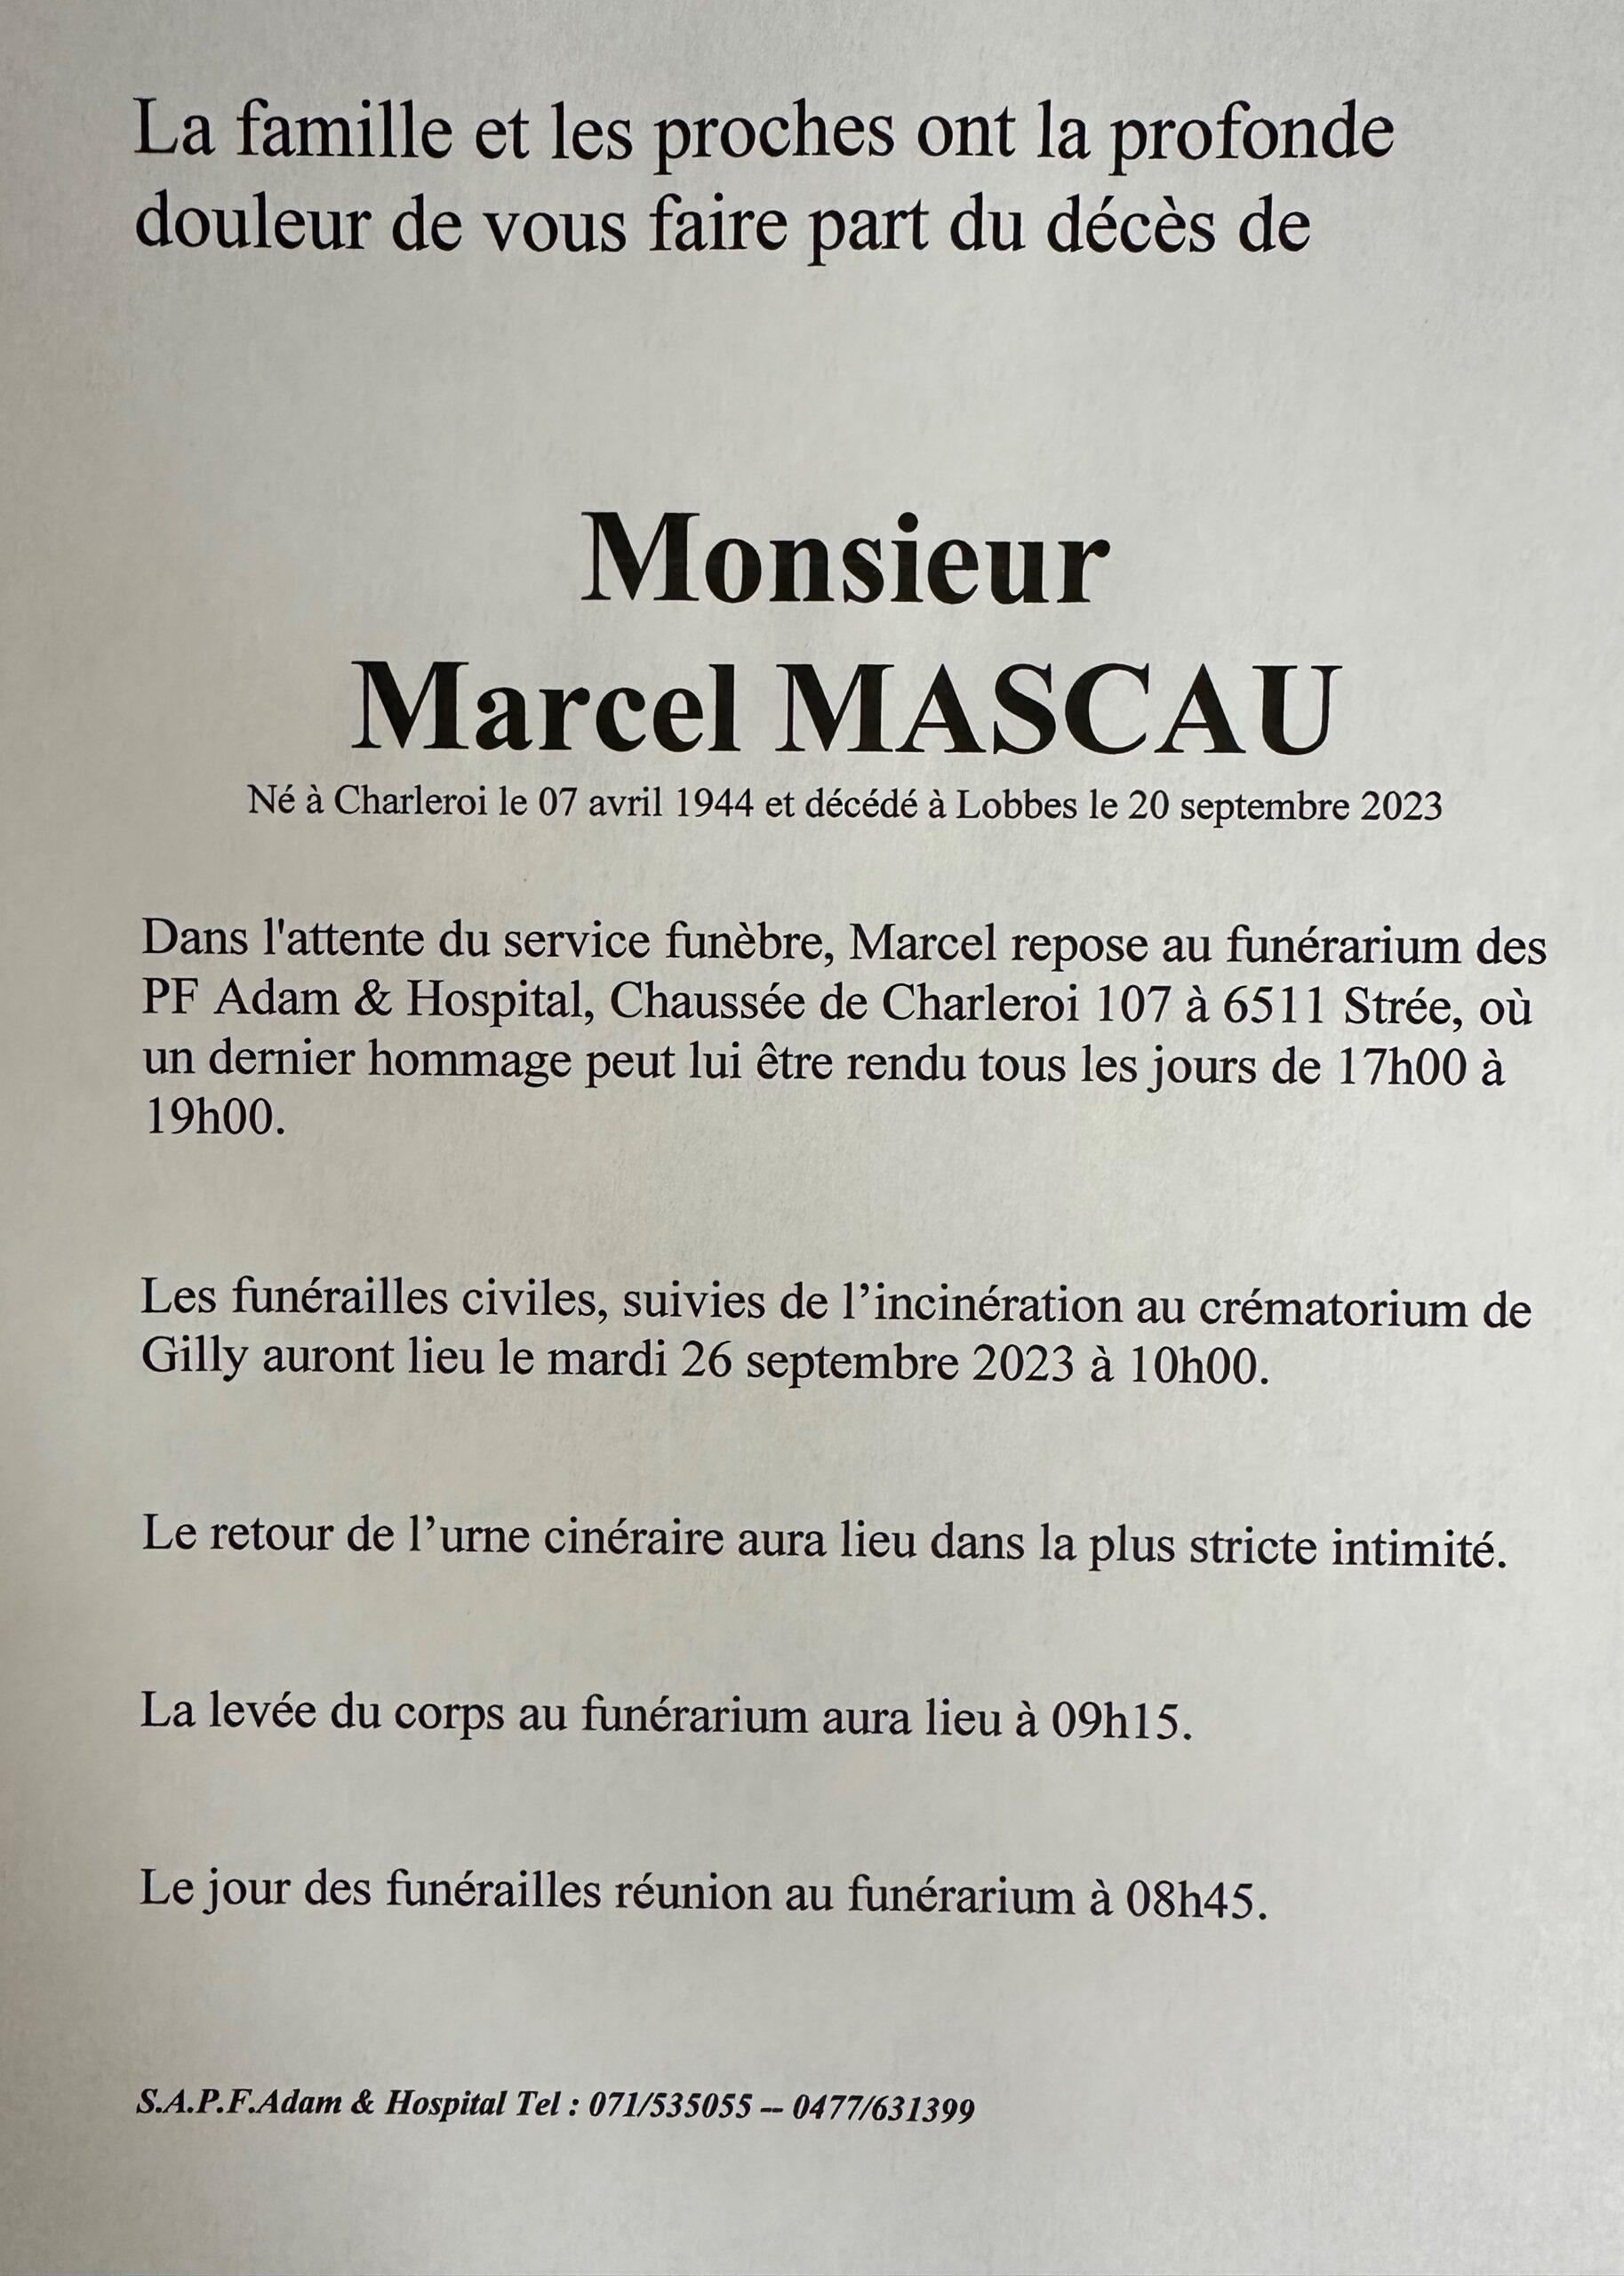 Marcel MASCAU scaled | Funérailles Adam Hospital